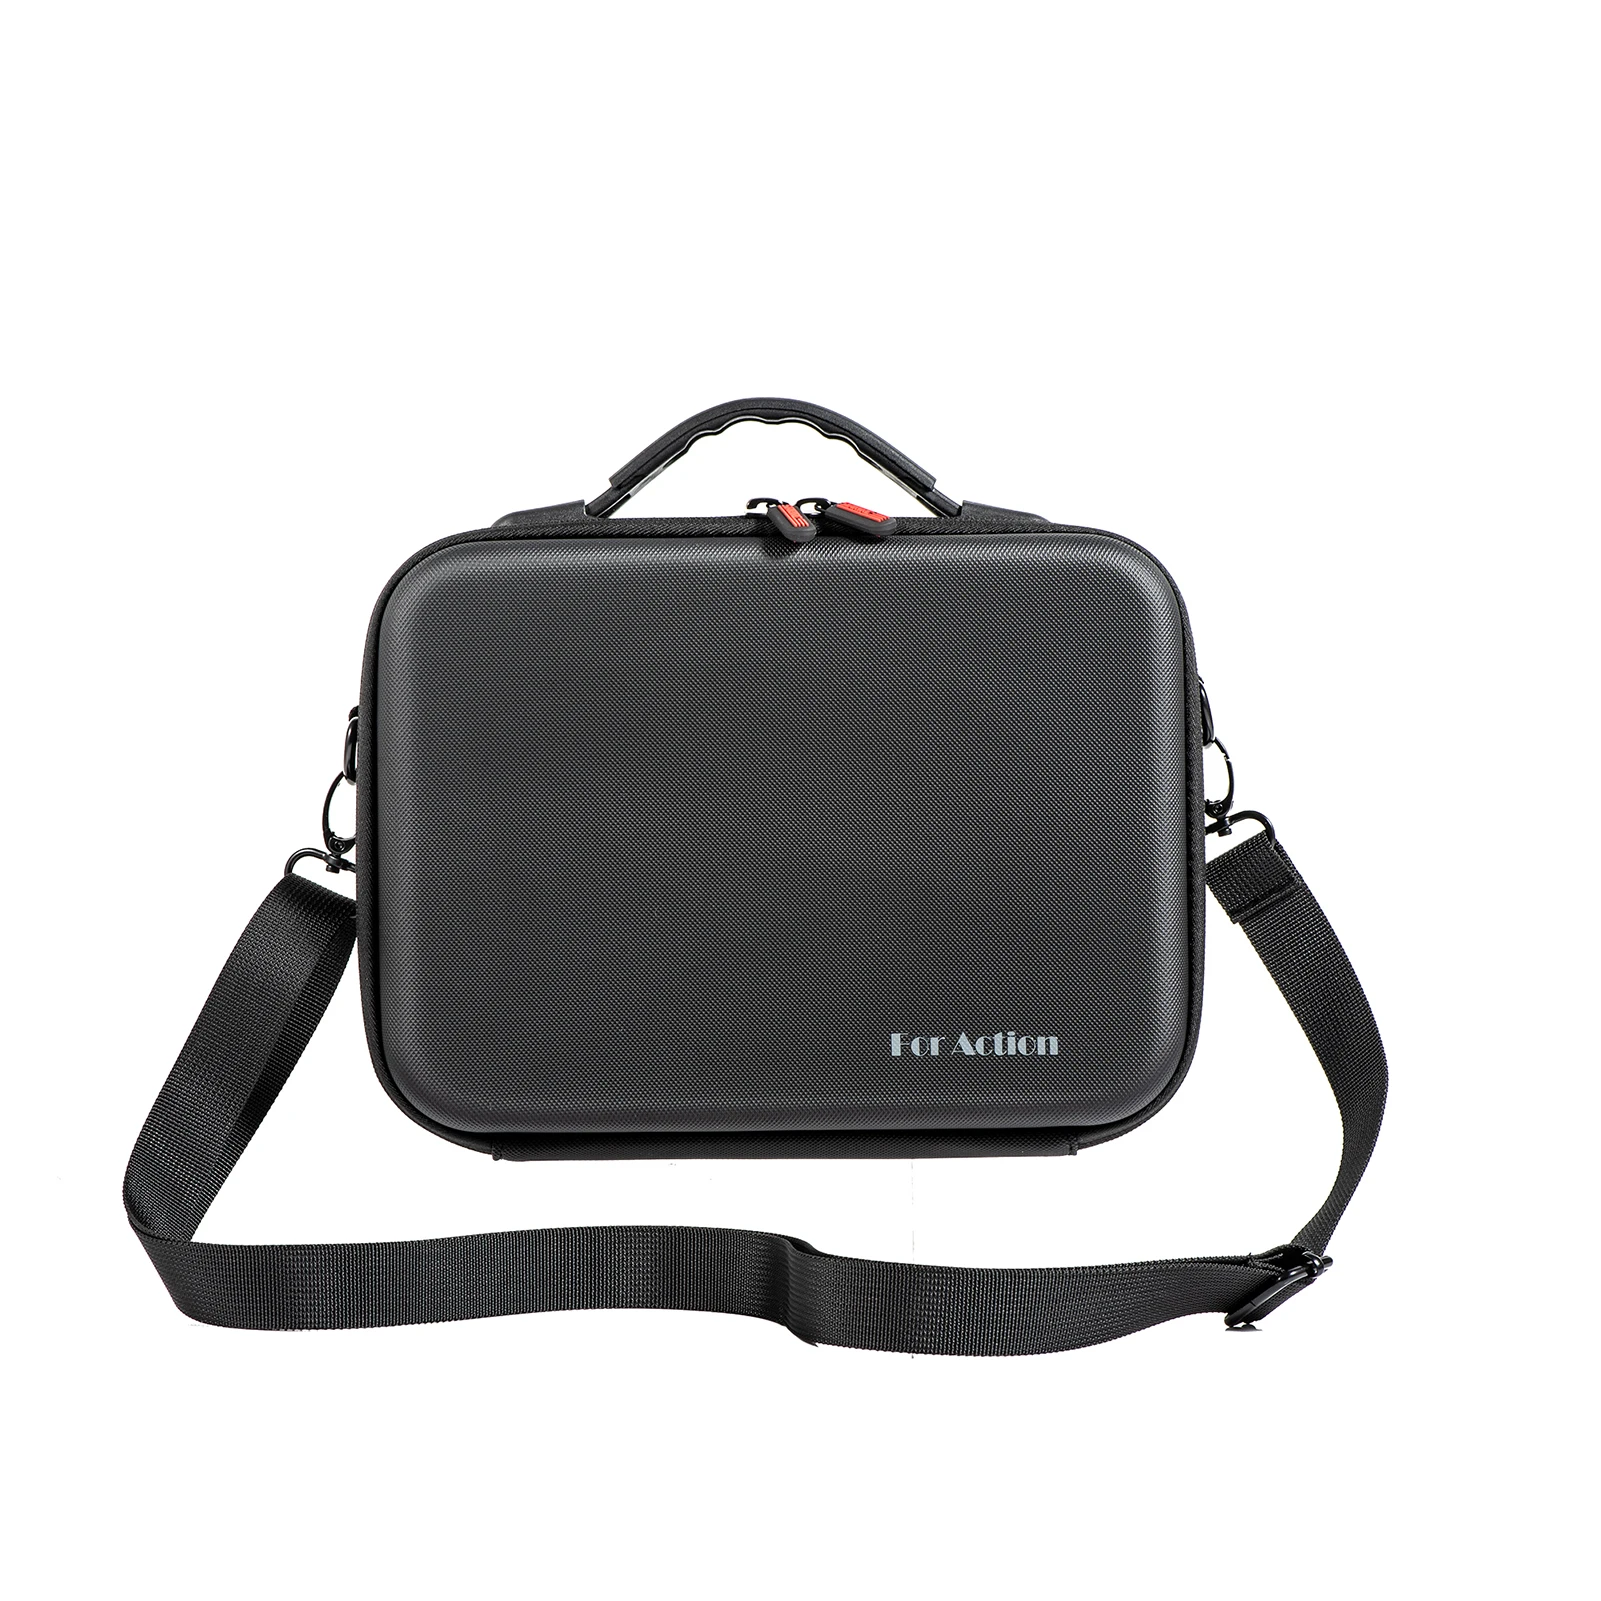 Portable Sports Camera Case Digital Camera Case Storage Bag Protective Bag for Digital Camera Semi-open for DJI Osmo Action 4